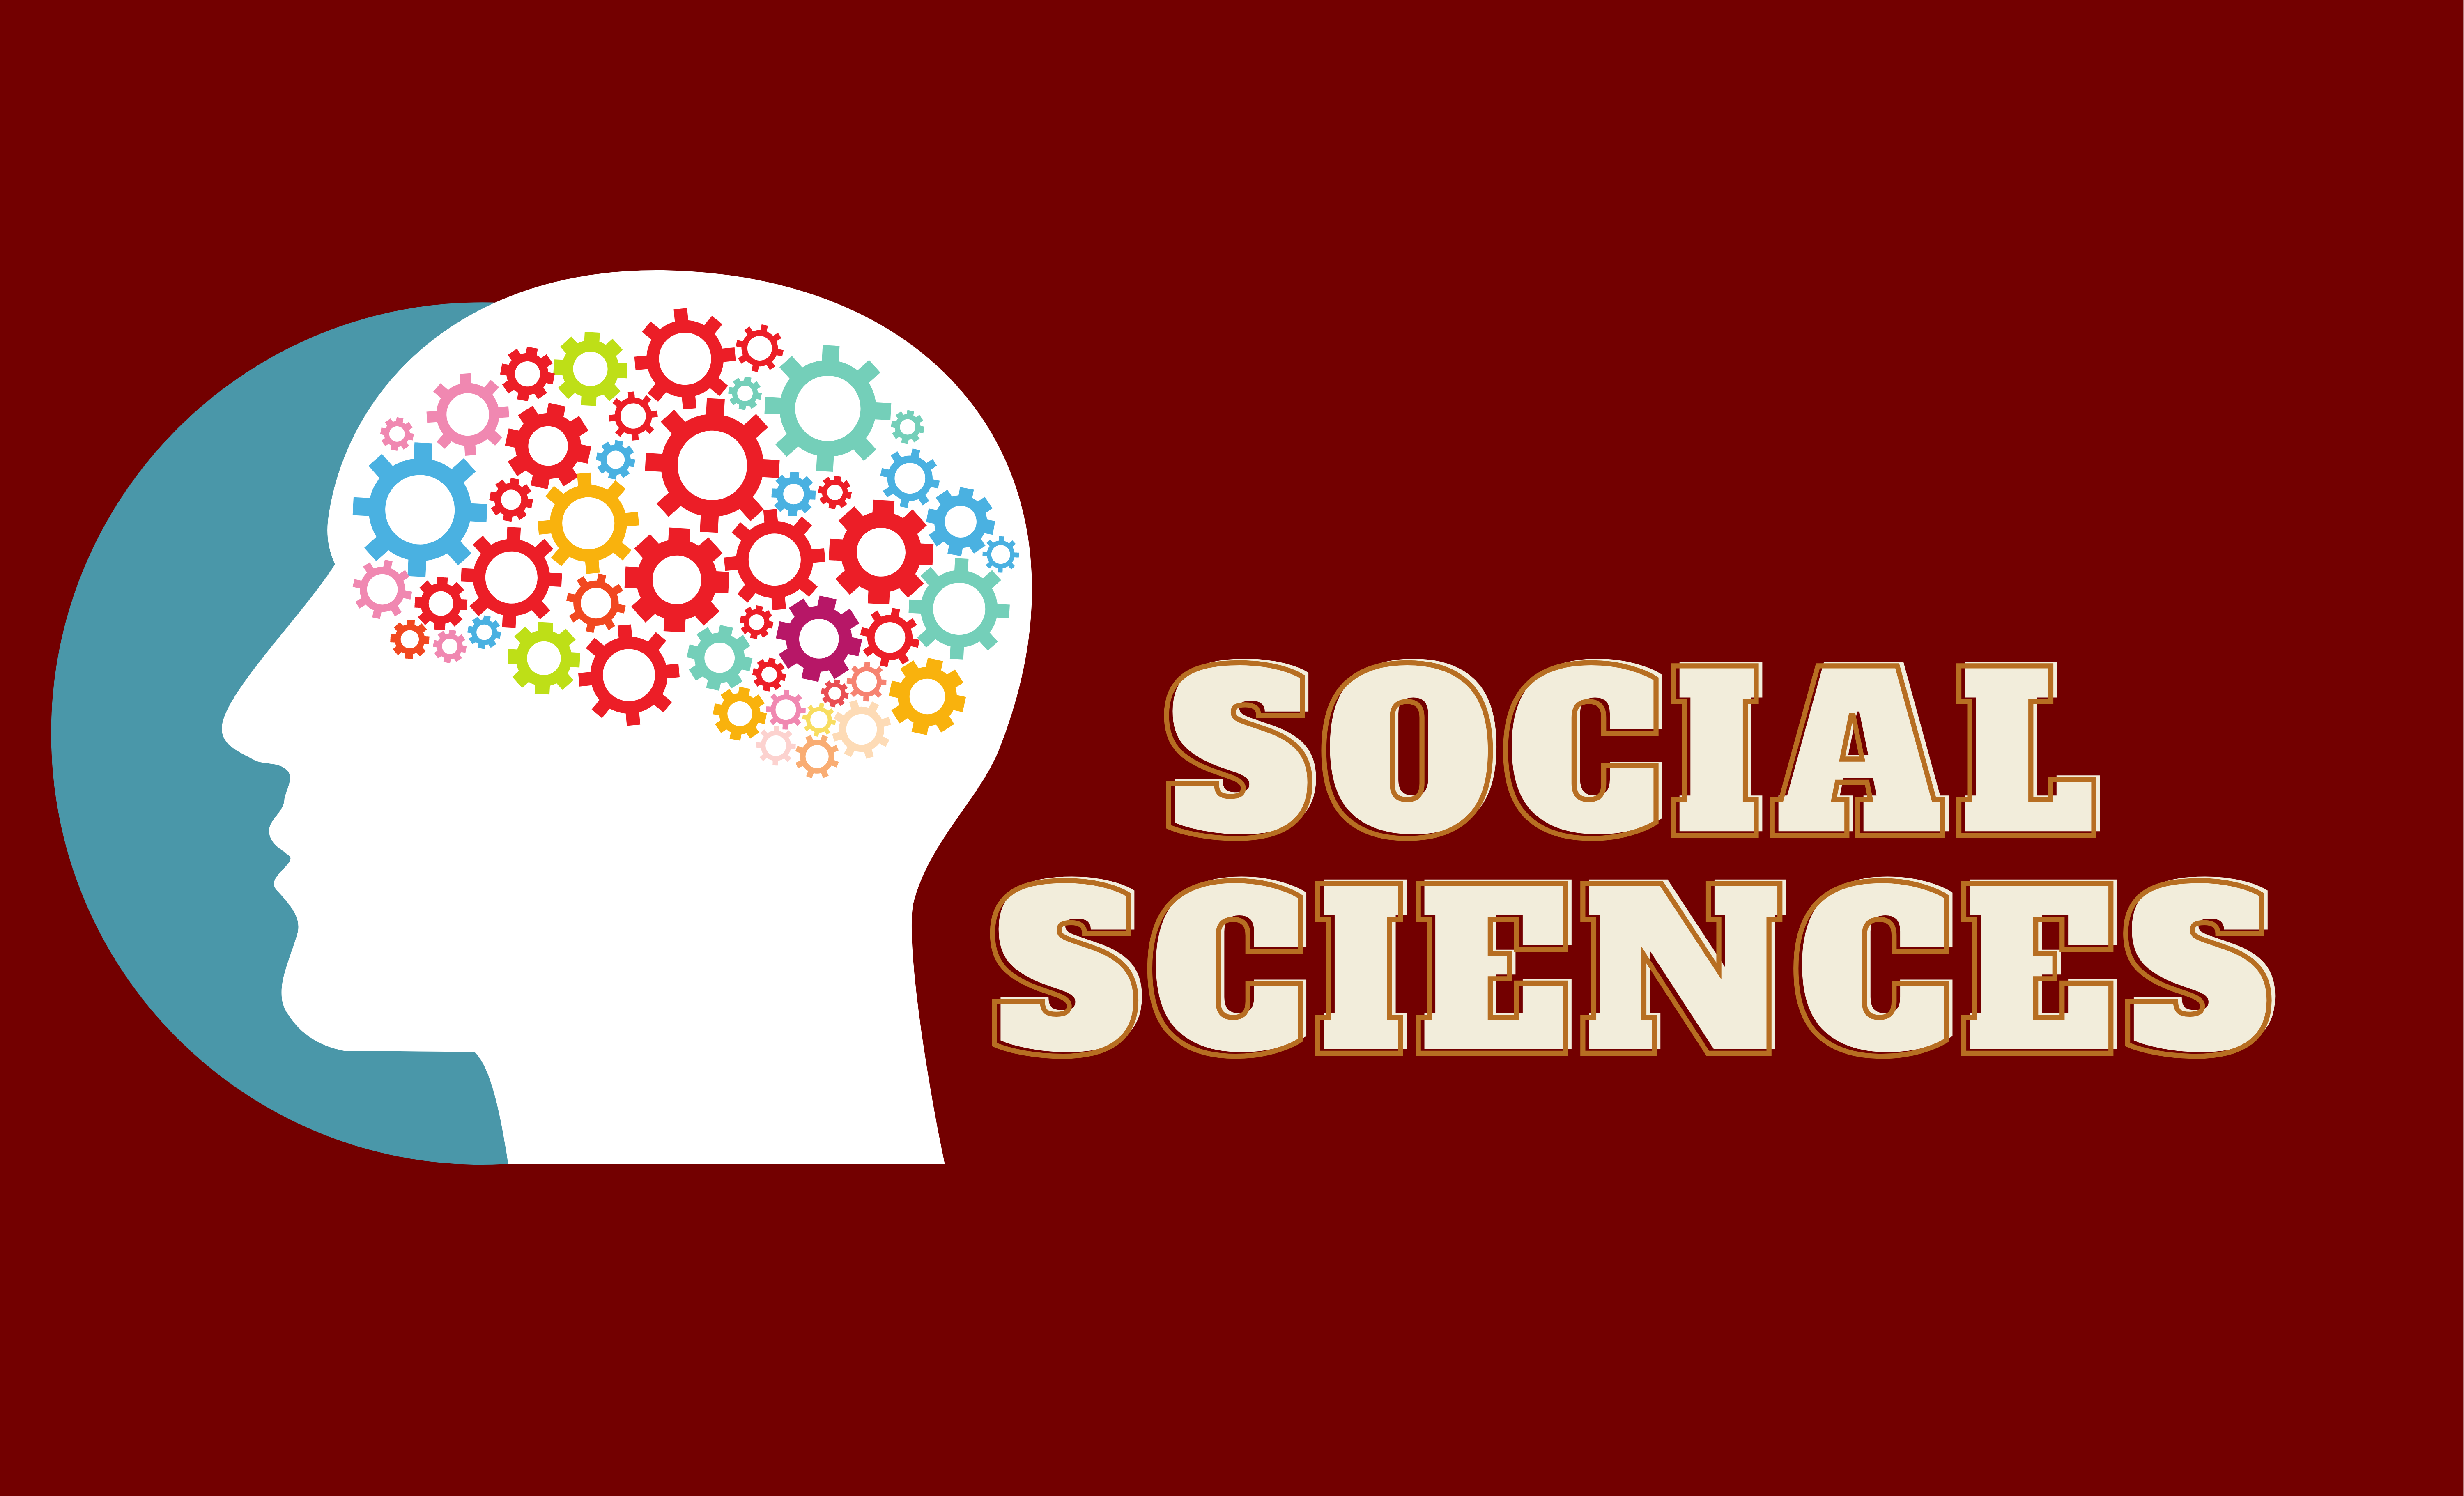 					View Social Sciences
				